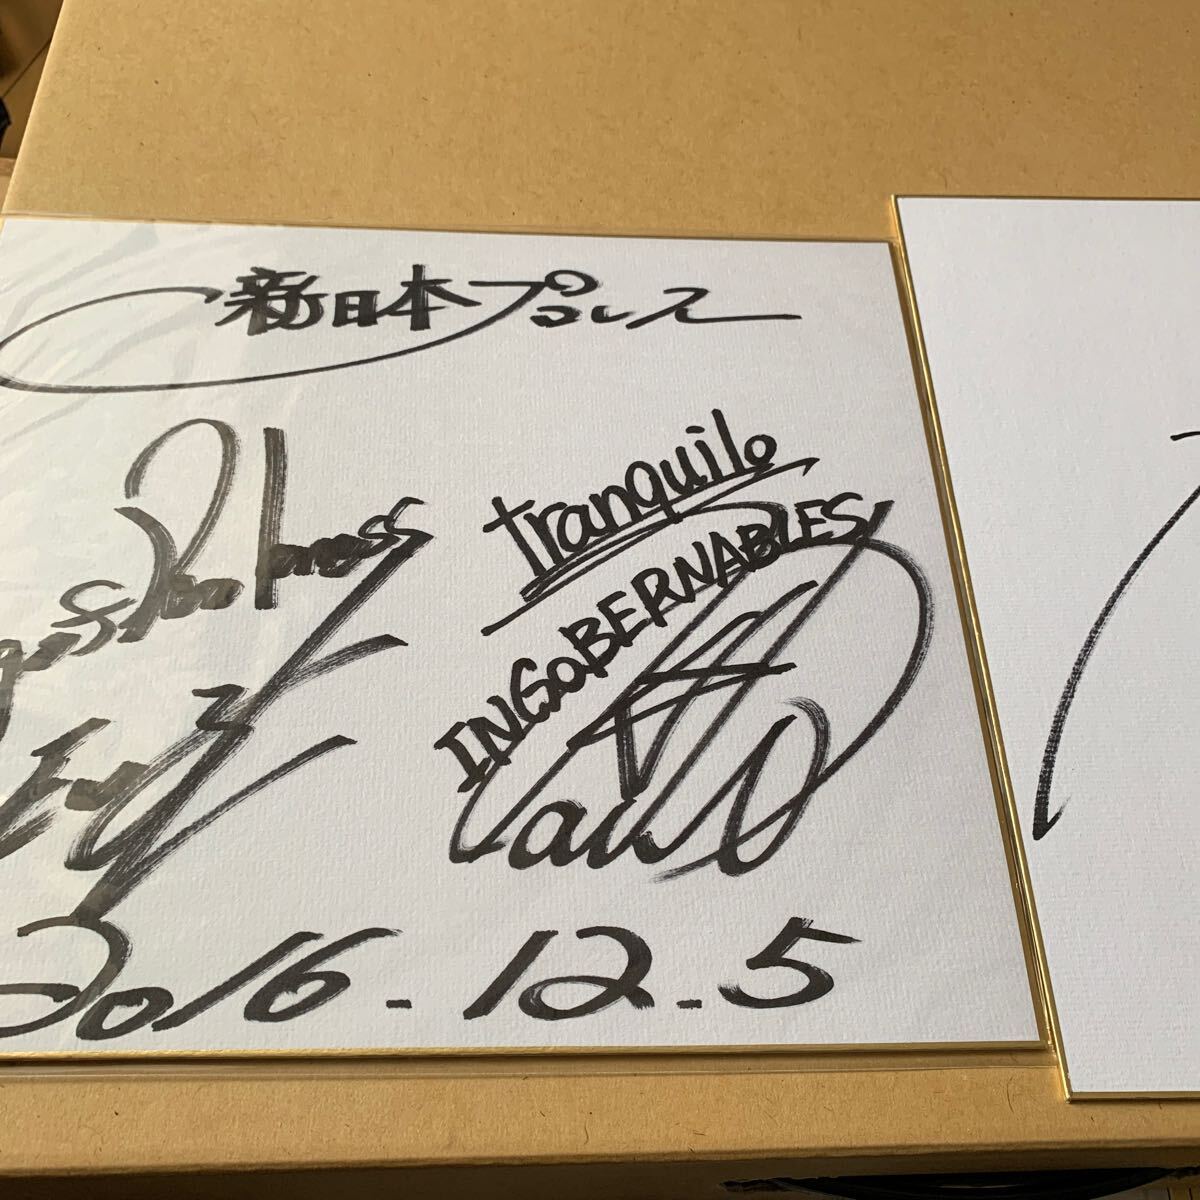  autograph autograph square fancy cardboard inside wistaria ..i- Bill Ishii ..